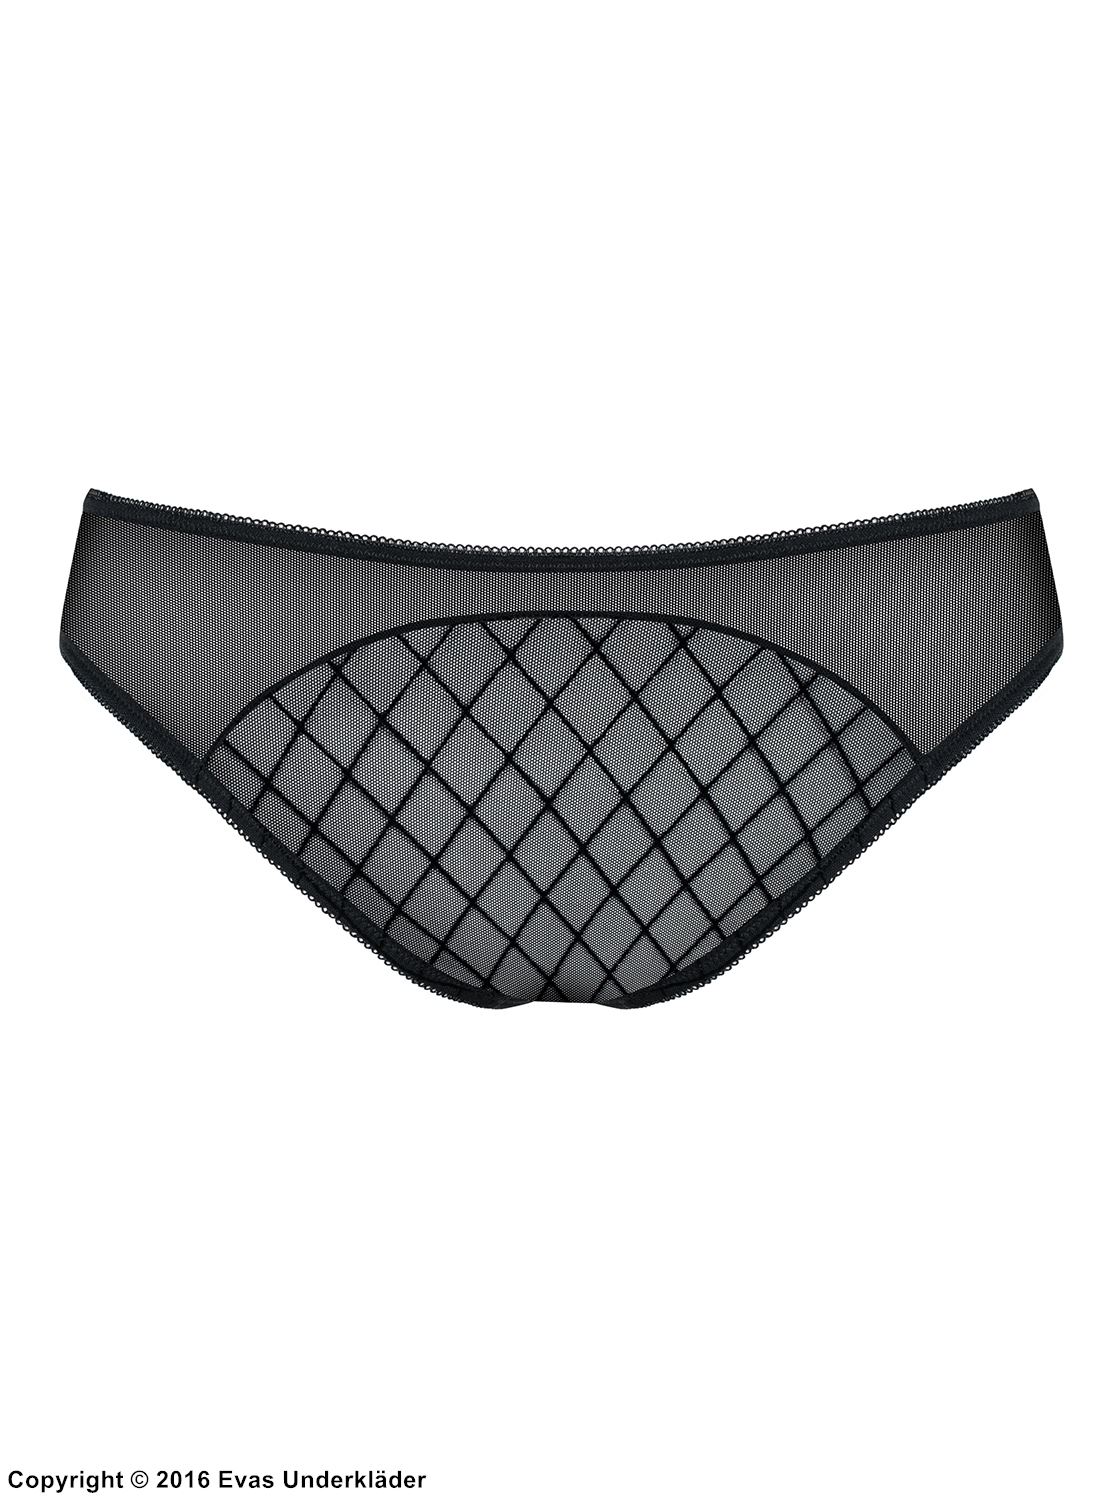 Romantic panties, sheer mesh, checkered pattern